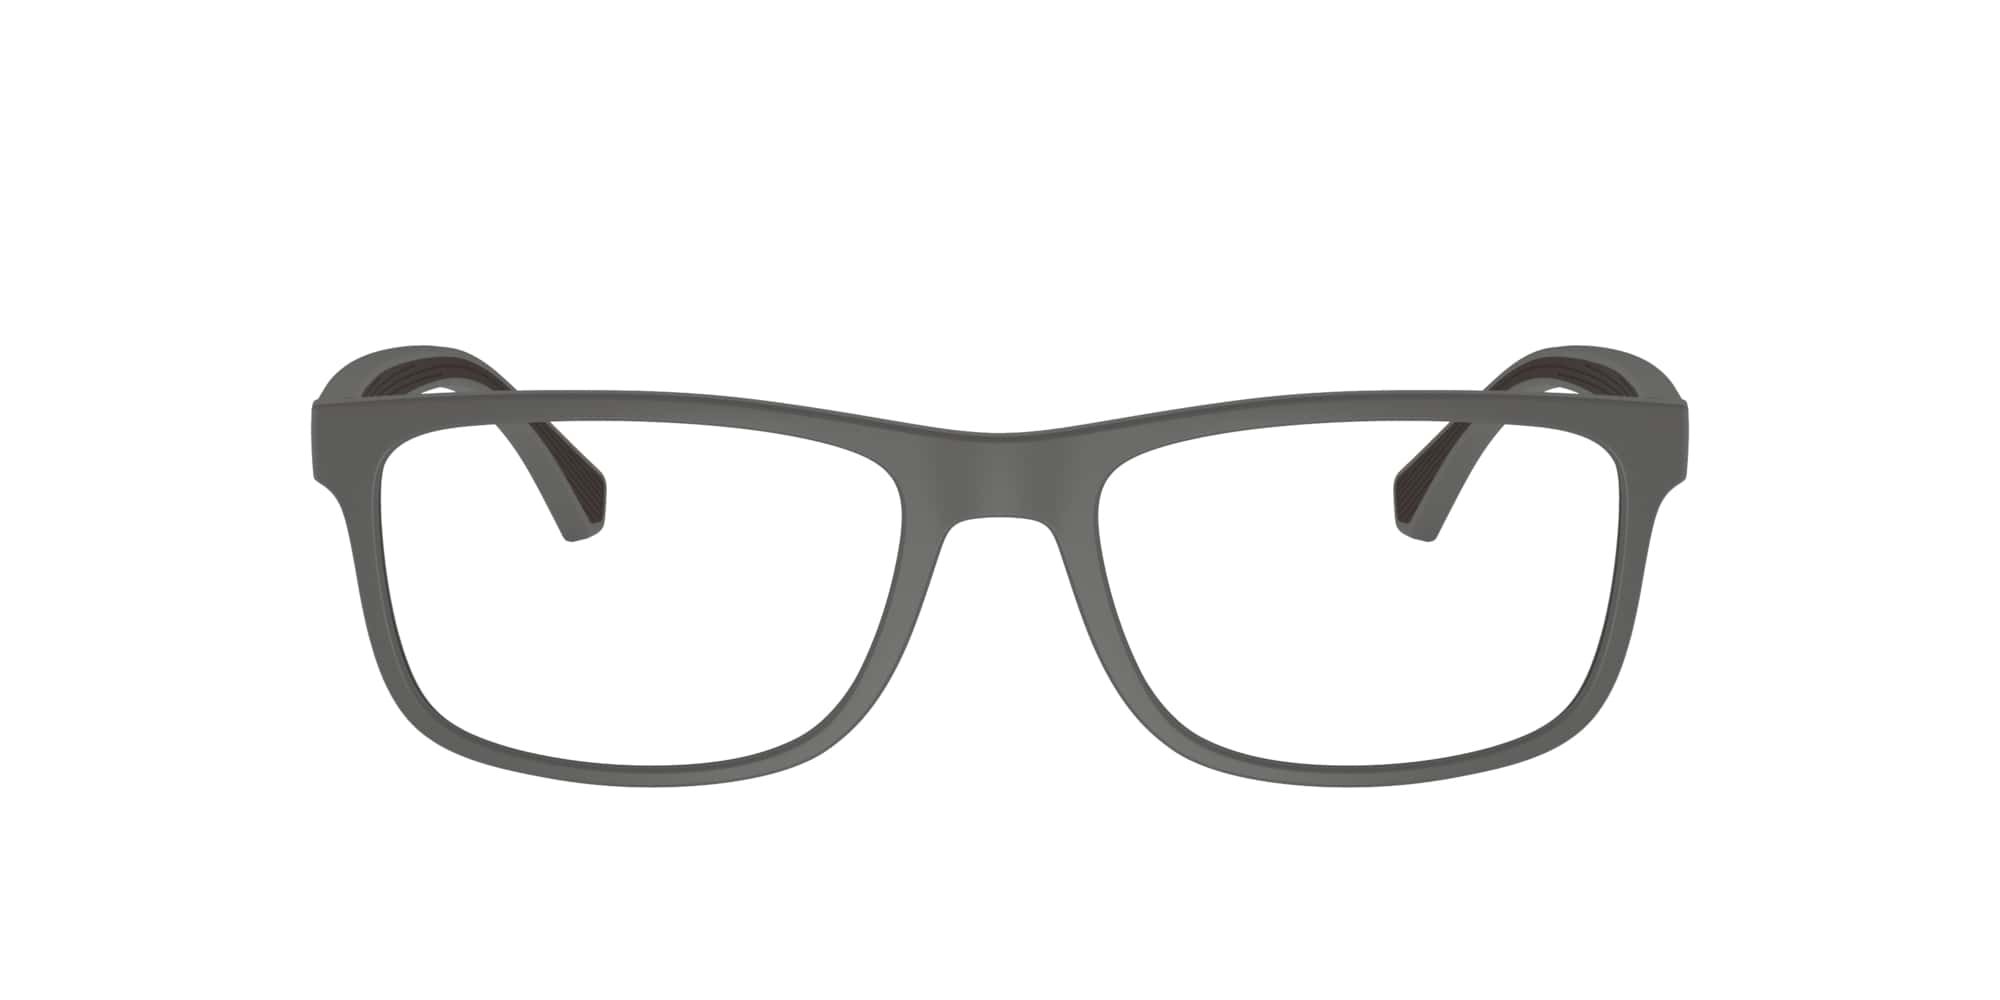 Emporio Armani Brille für Herren in grau matt EA3147 5126 55